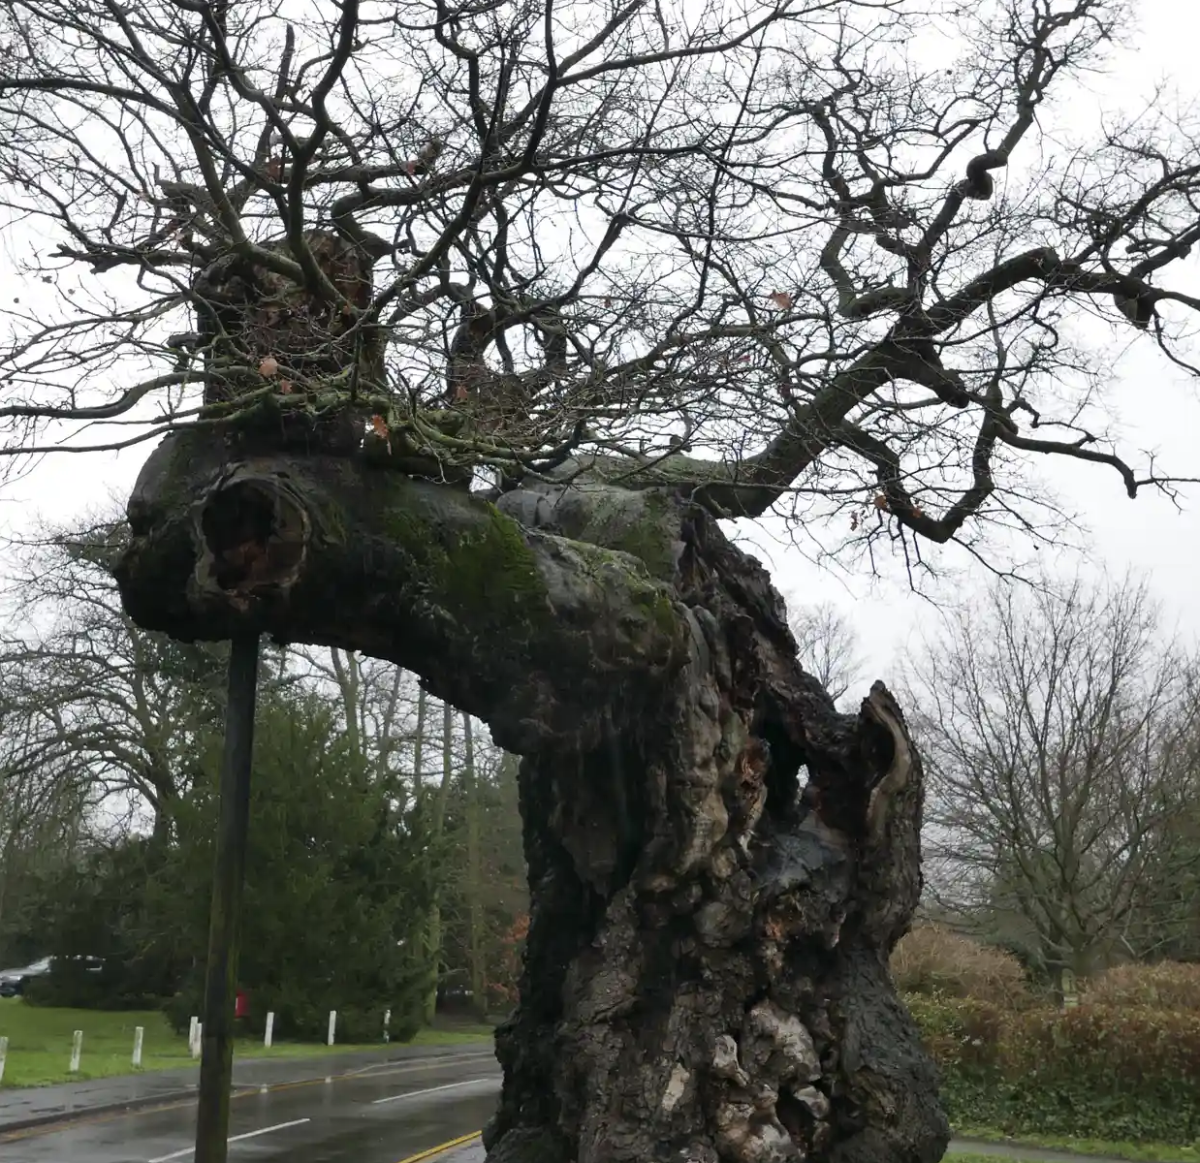 The Grand Old Oak Tree